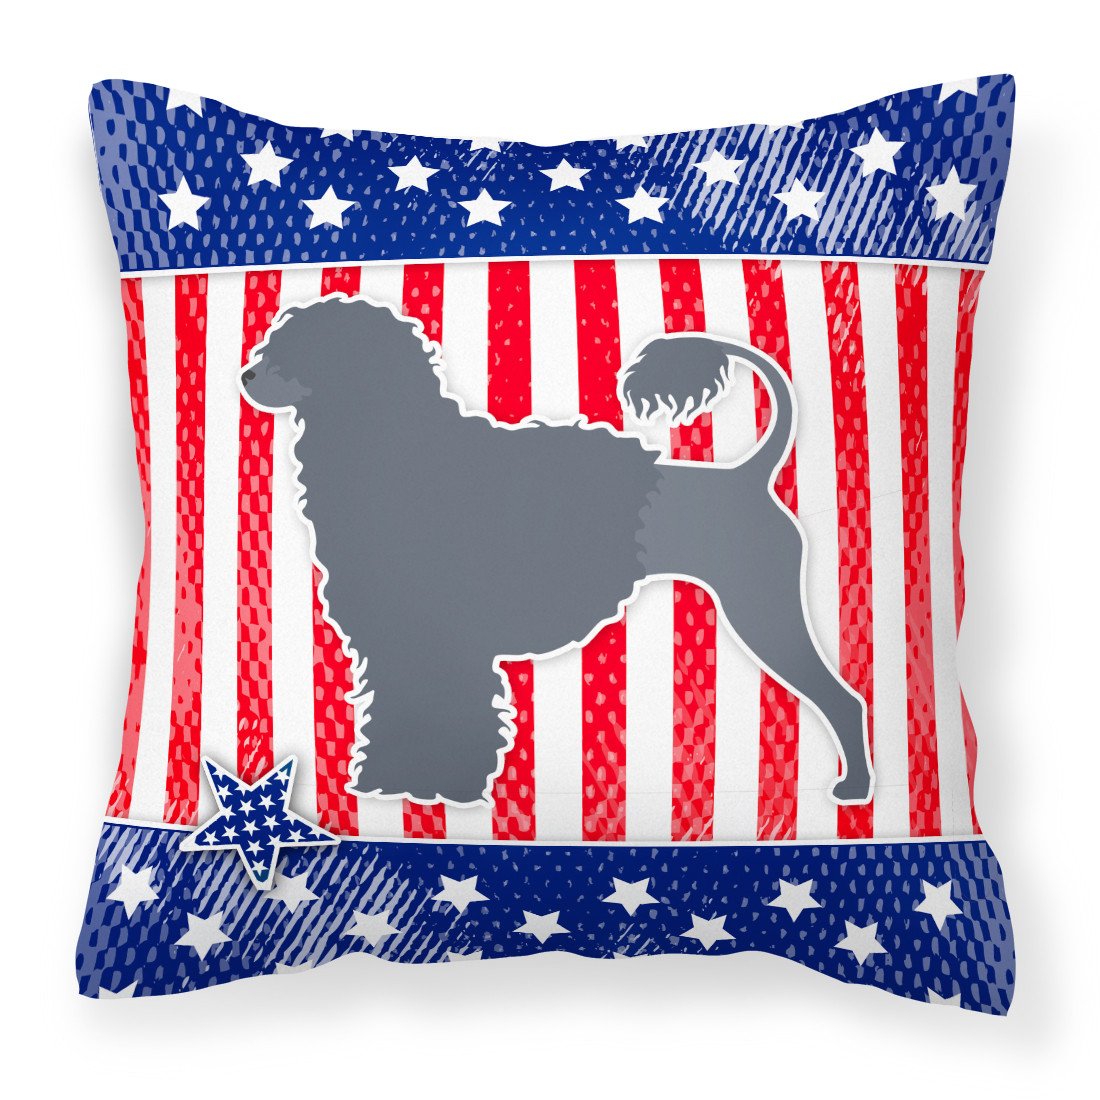 USA Patriotic Portuguese Water Dog Fabric Decorative Pillow BB3368PW1818 by Caroline's Treasures